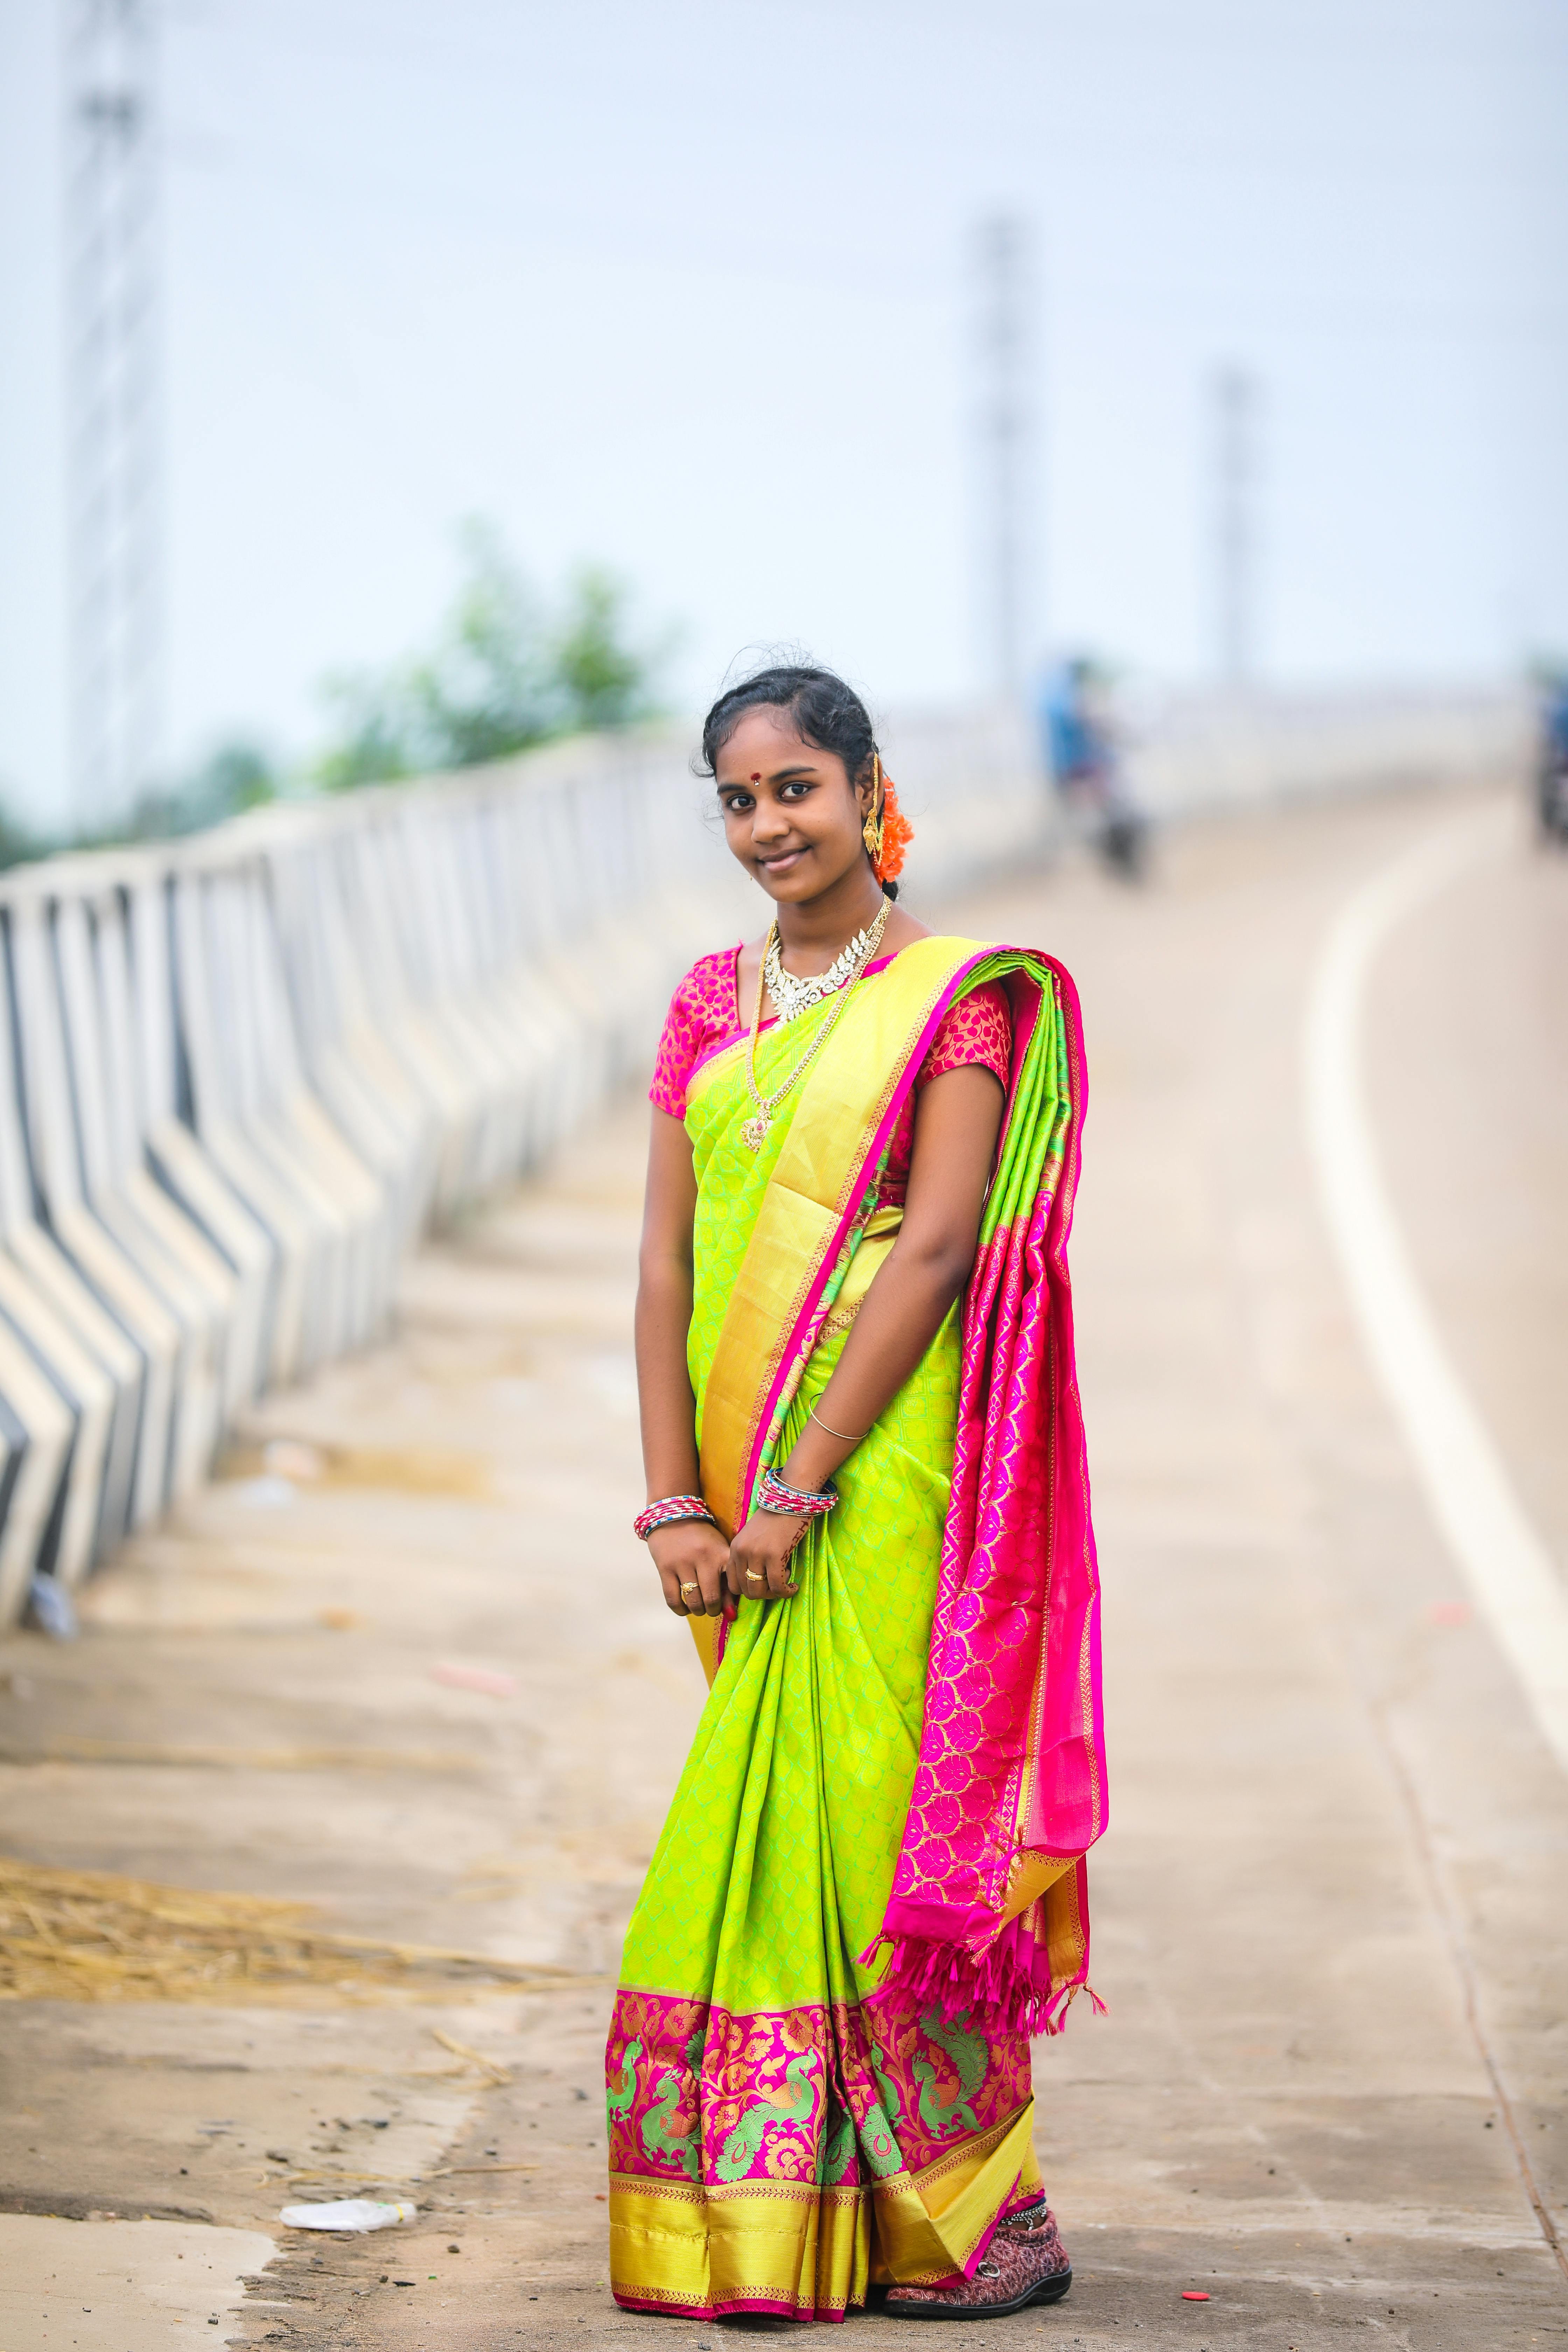 Young Smiling Woman Wearing Yellow Sari and Pink Choli Blouse